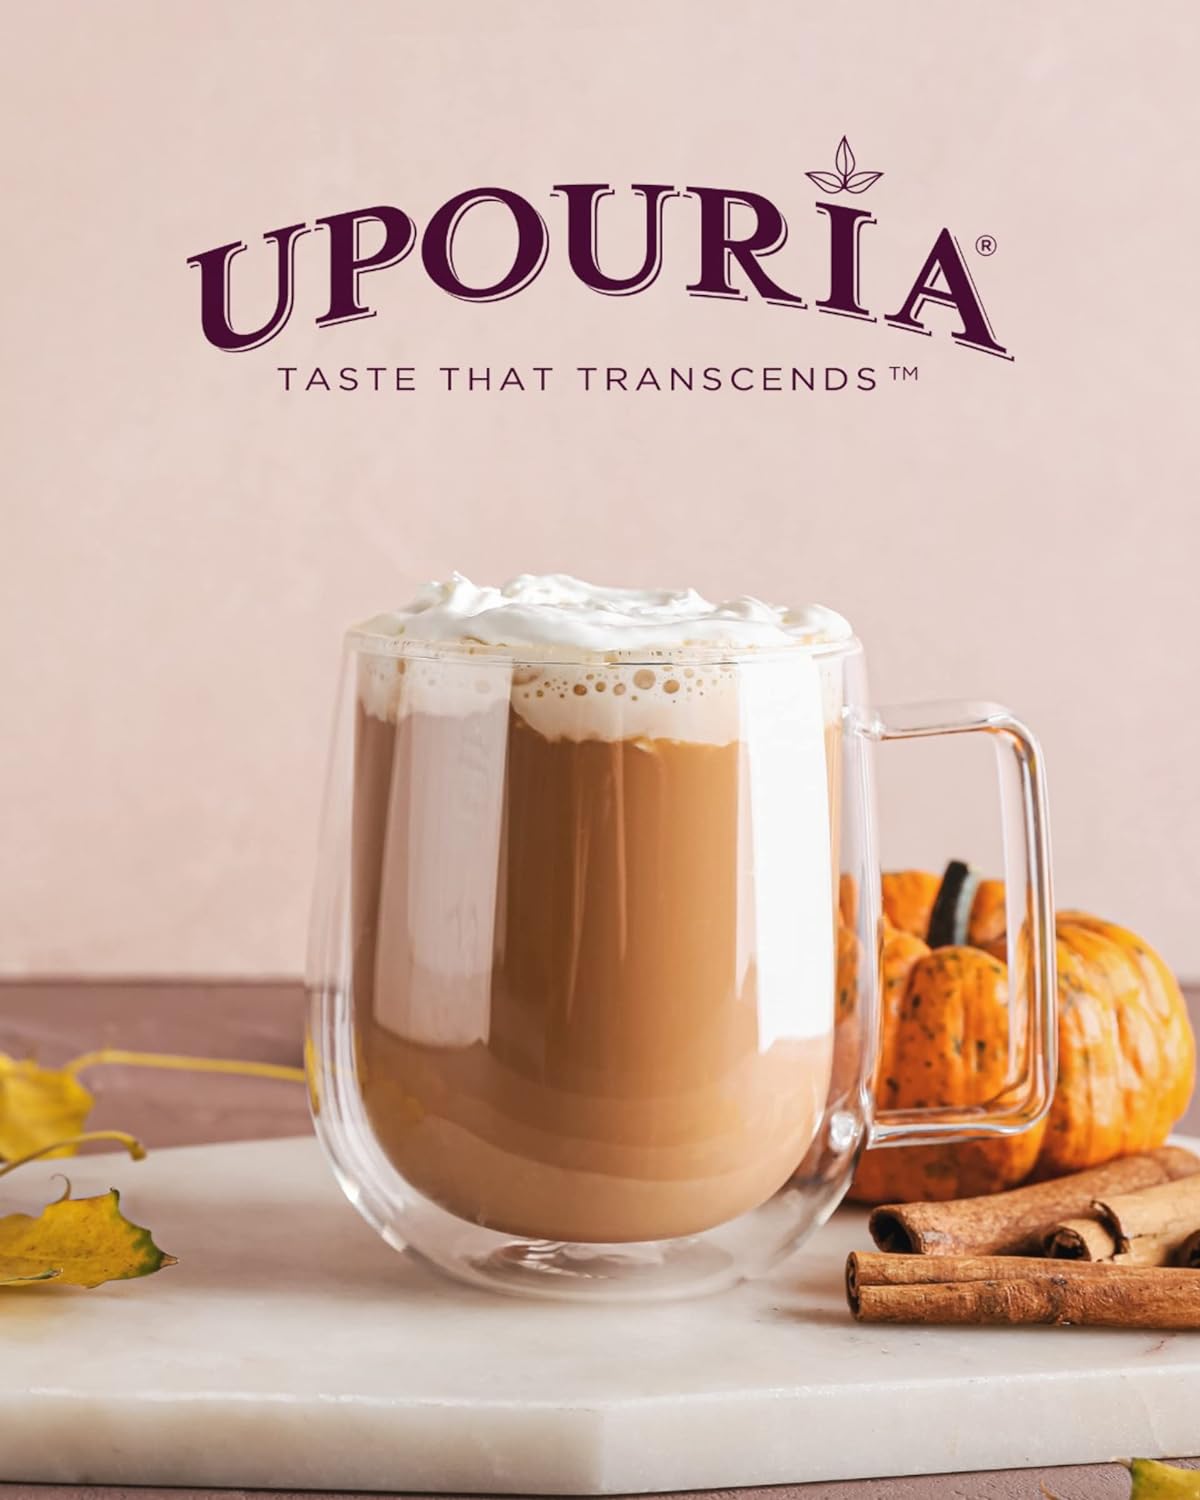 Upouria Hazelnut Coffee Syrup Flavoring, 100% Vegan, Gluten Free, Kosher, 750 mL Bottle - Pump Sold Separately : Grocery & Gourmet Food